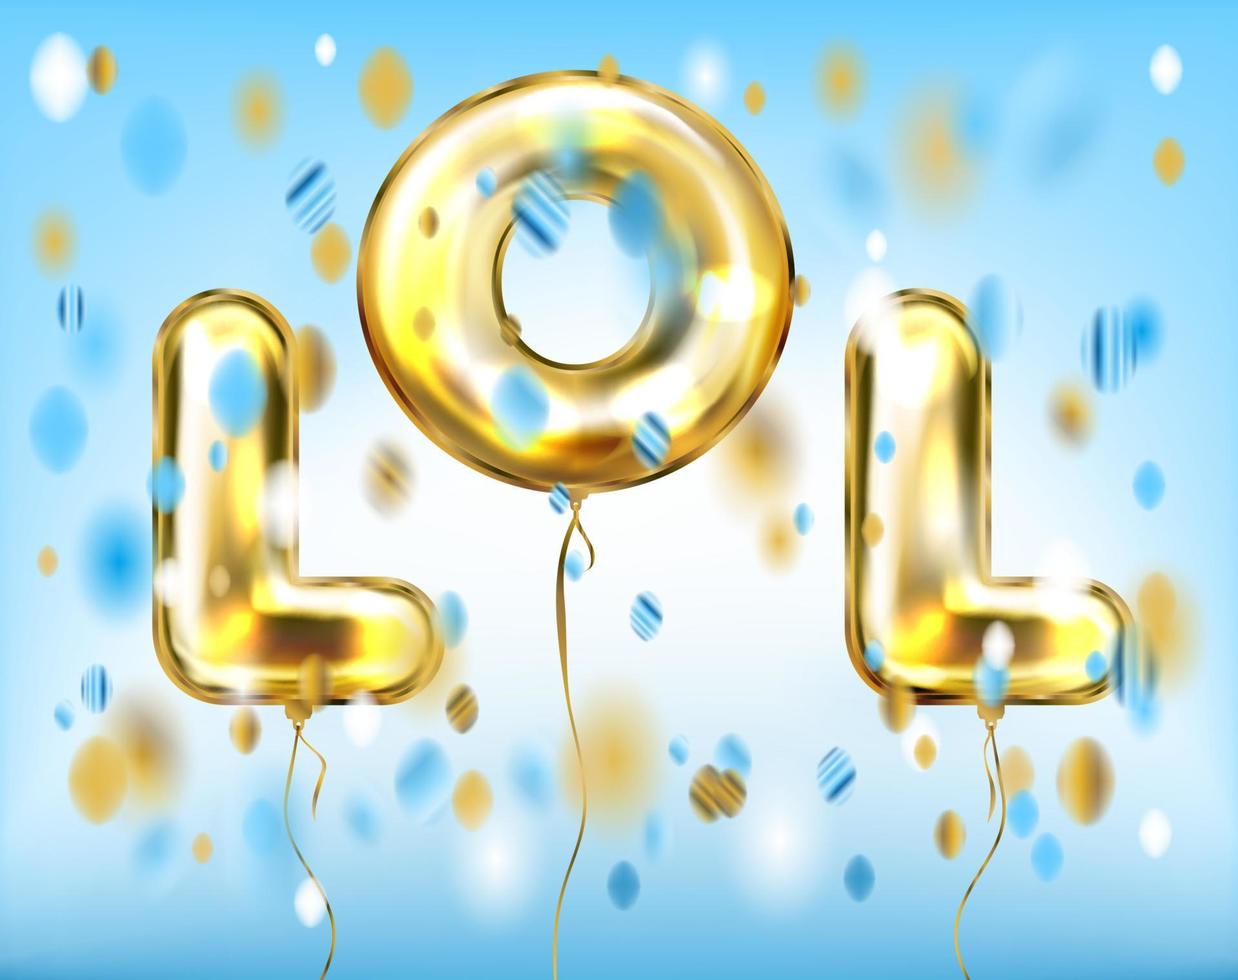 lol-schriftzug durch goldene folienballons im blauen himmel mit konfetti vektor